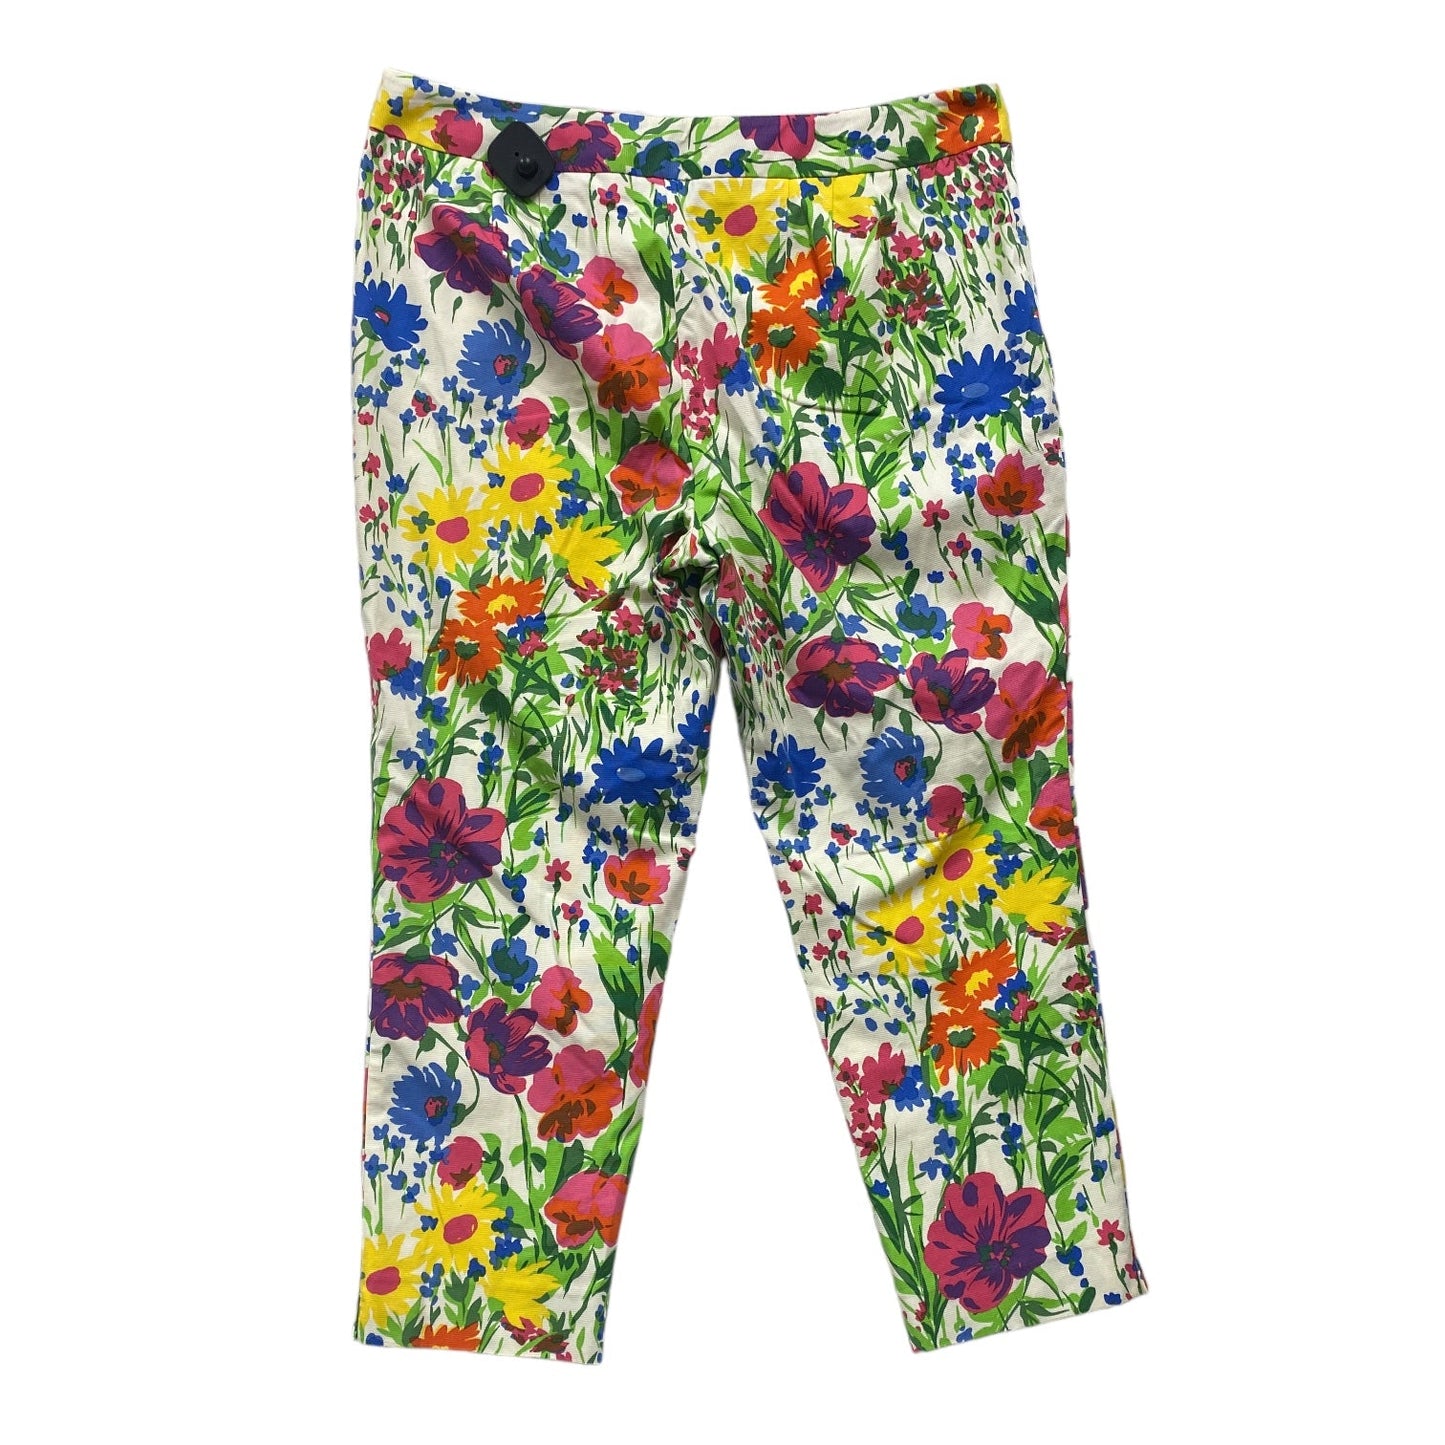 Floral Print Pants Cropped Talbots, Size 16